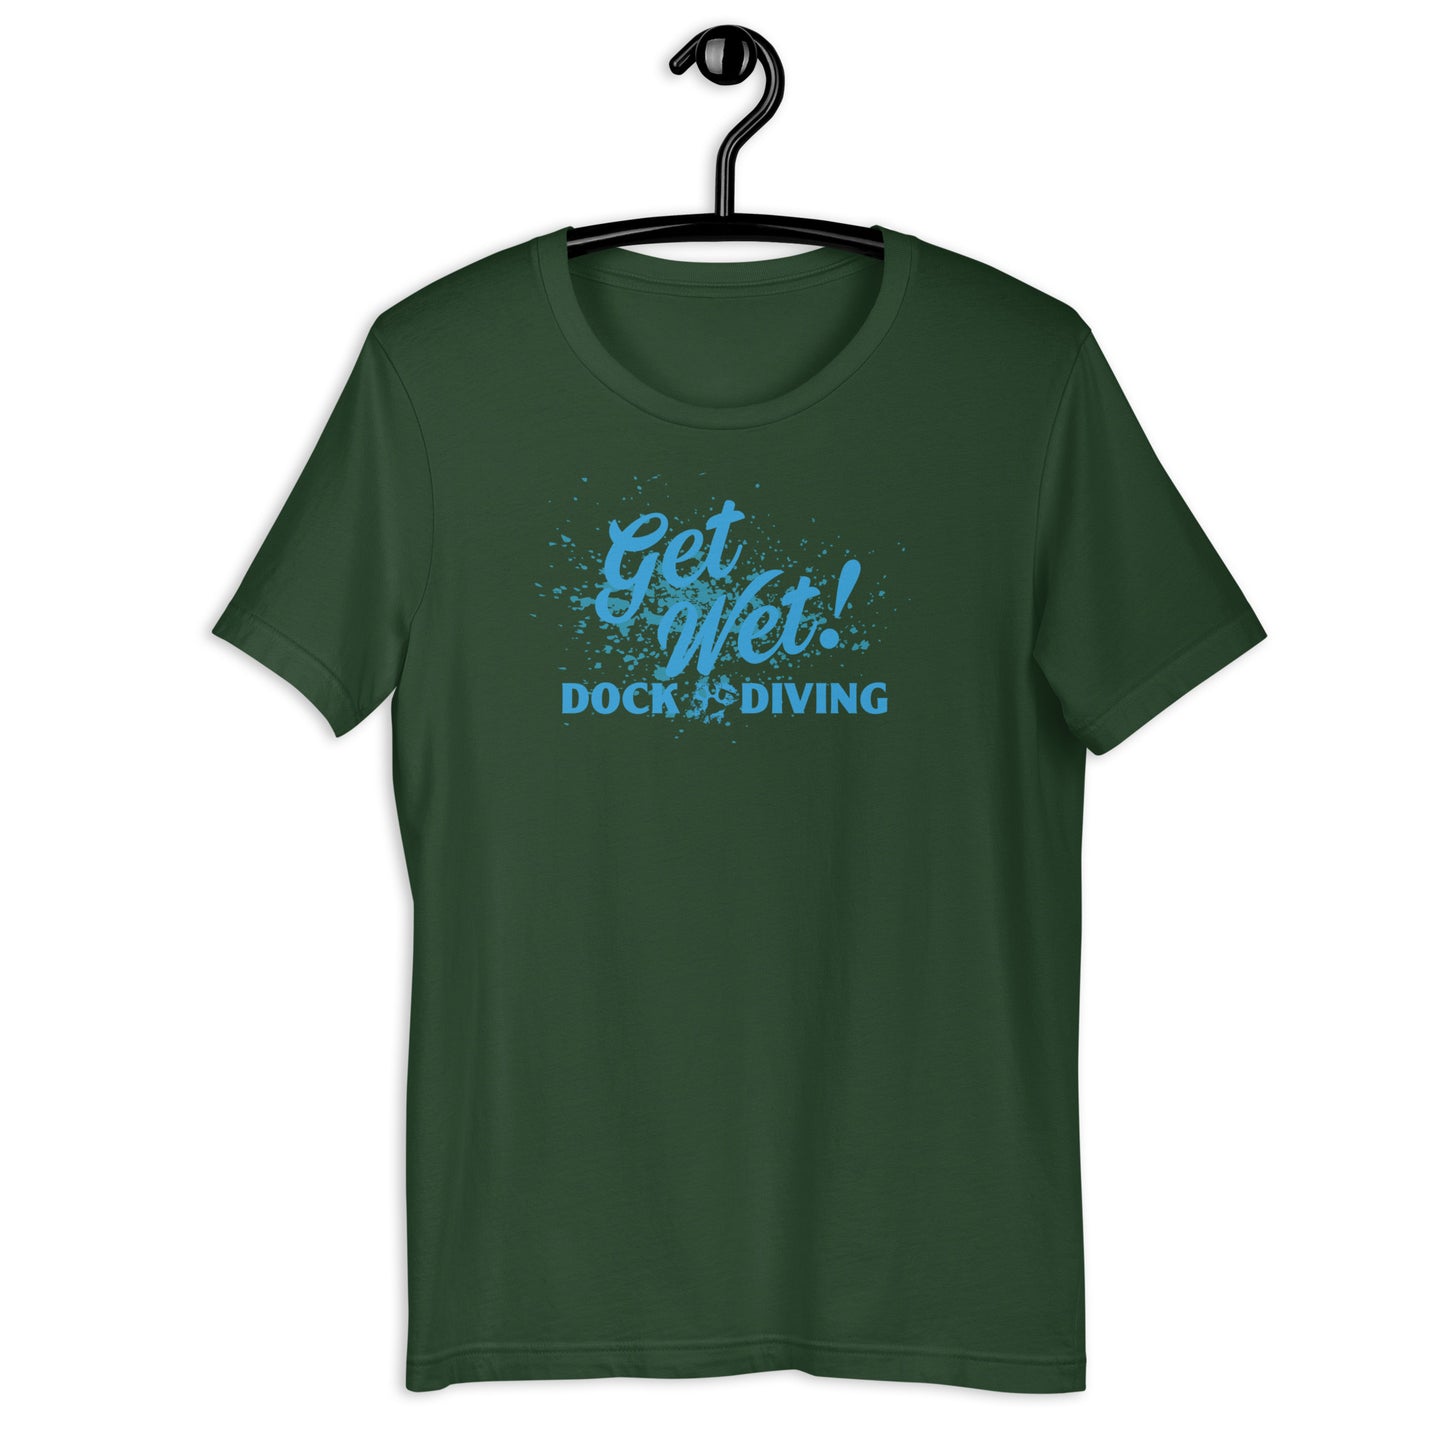 GET WET, DOCK DIVING - Unisex t-shirt